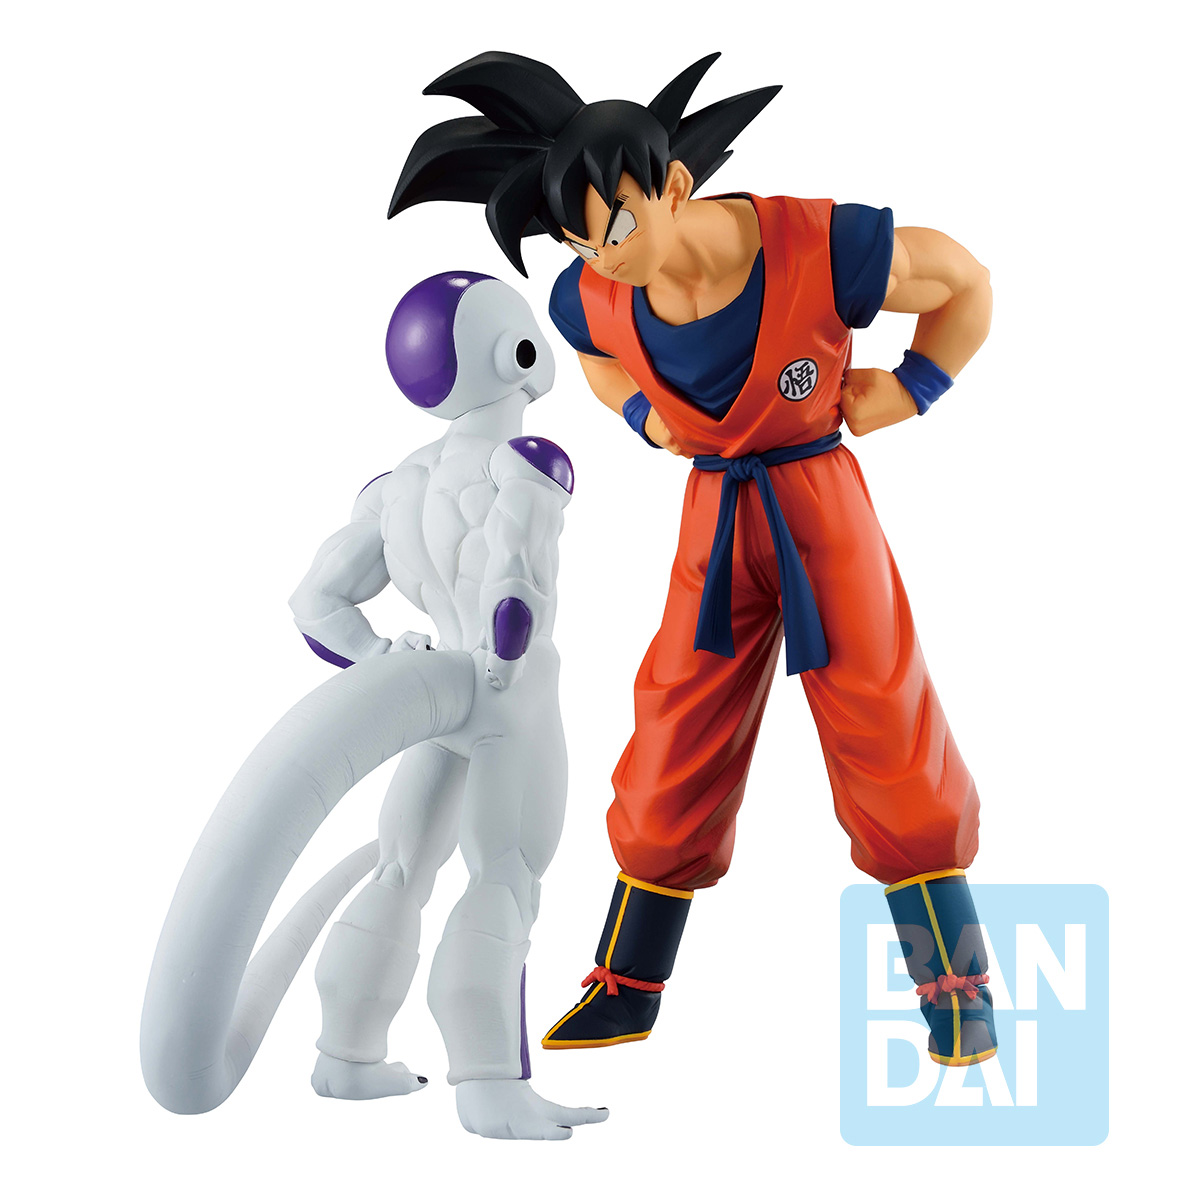 Son Goku & Frieza Ball Battle on Planet Namek Ver Dragon Ball Z Ichiban Figure image count 2